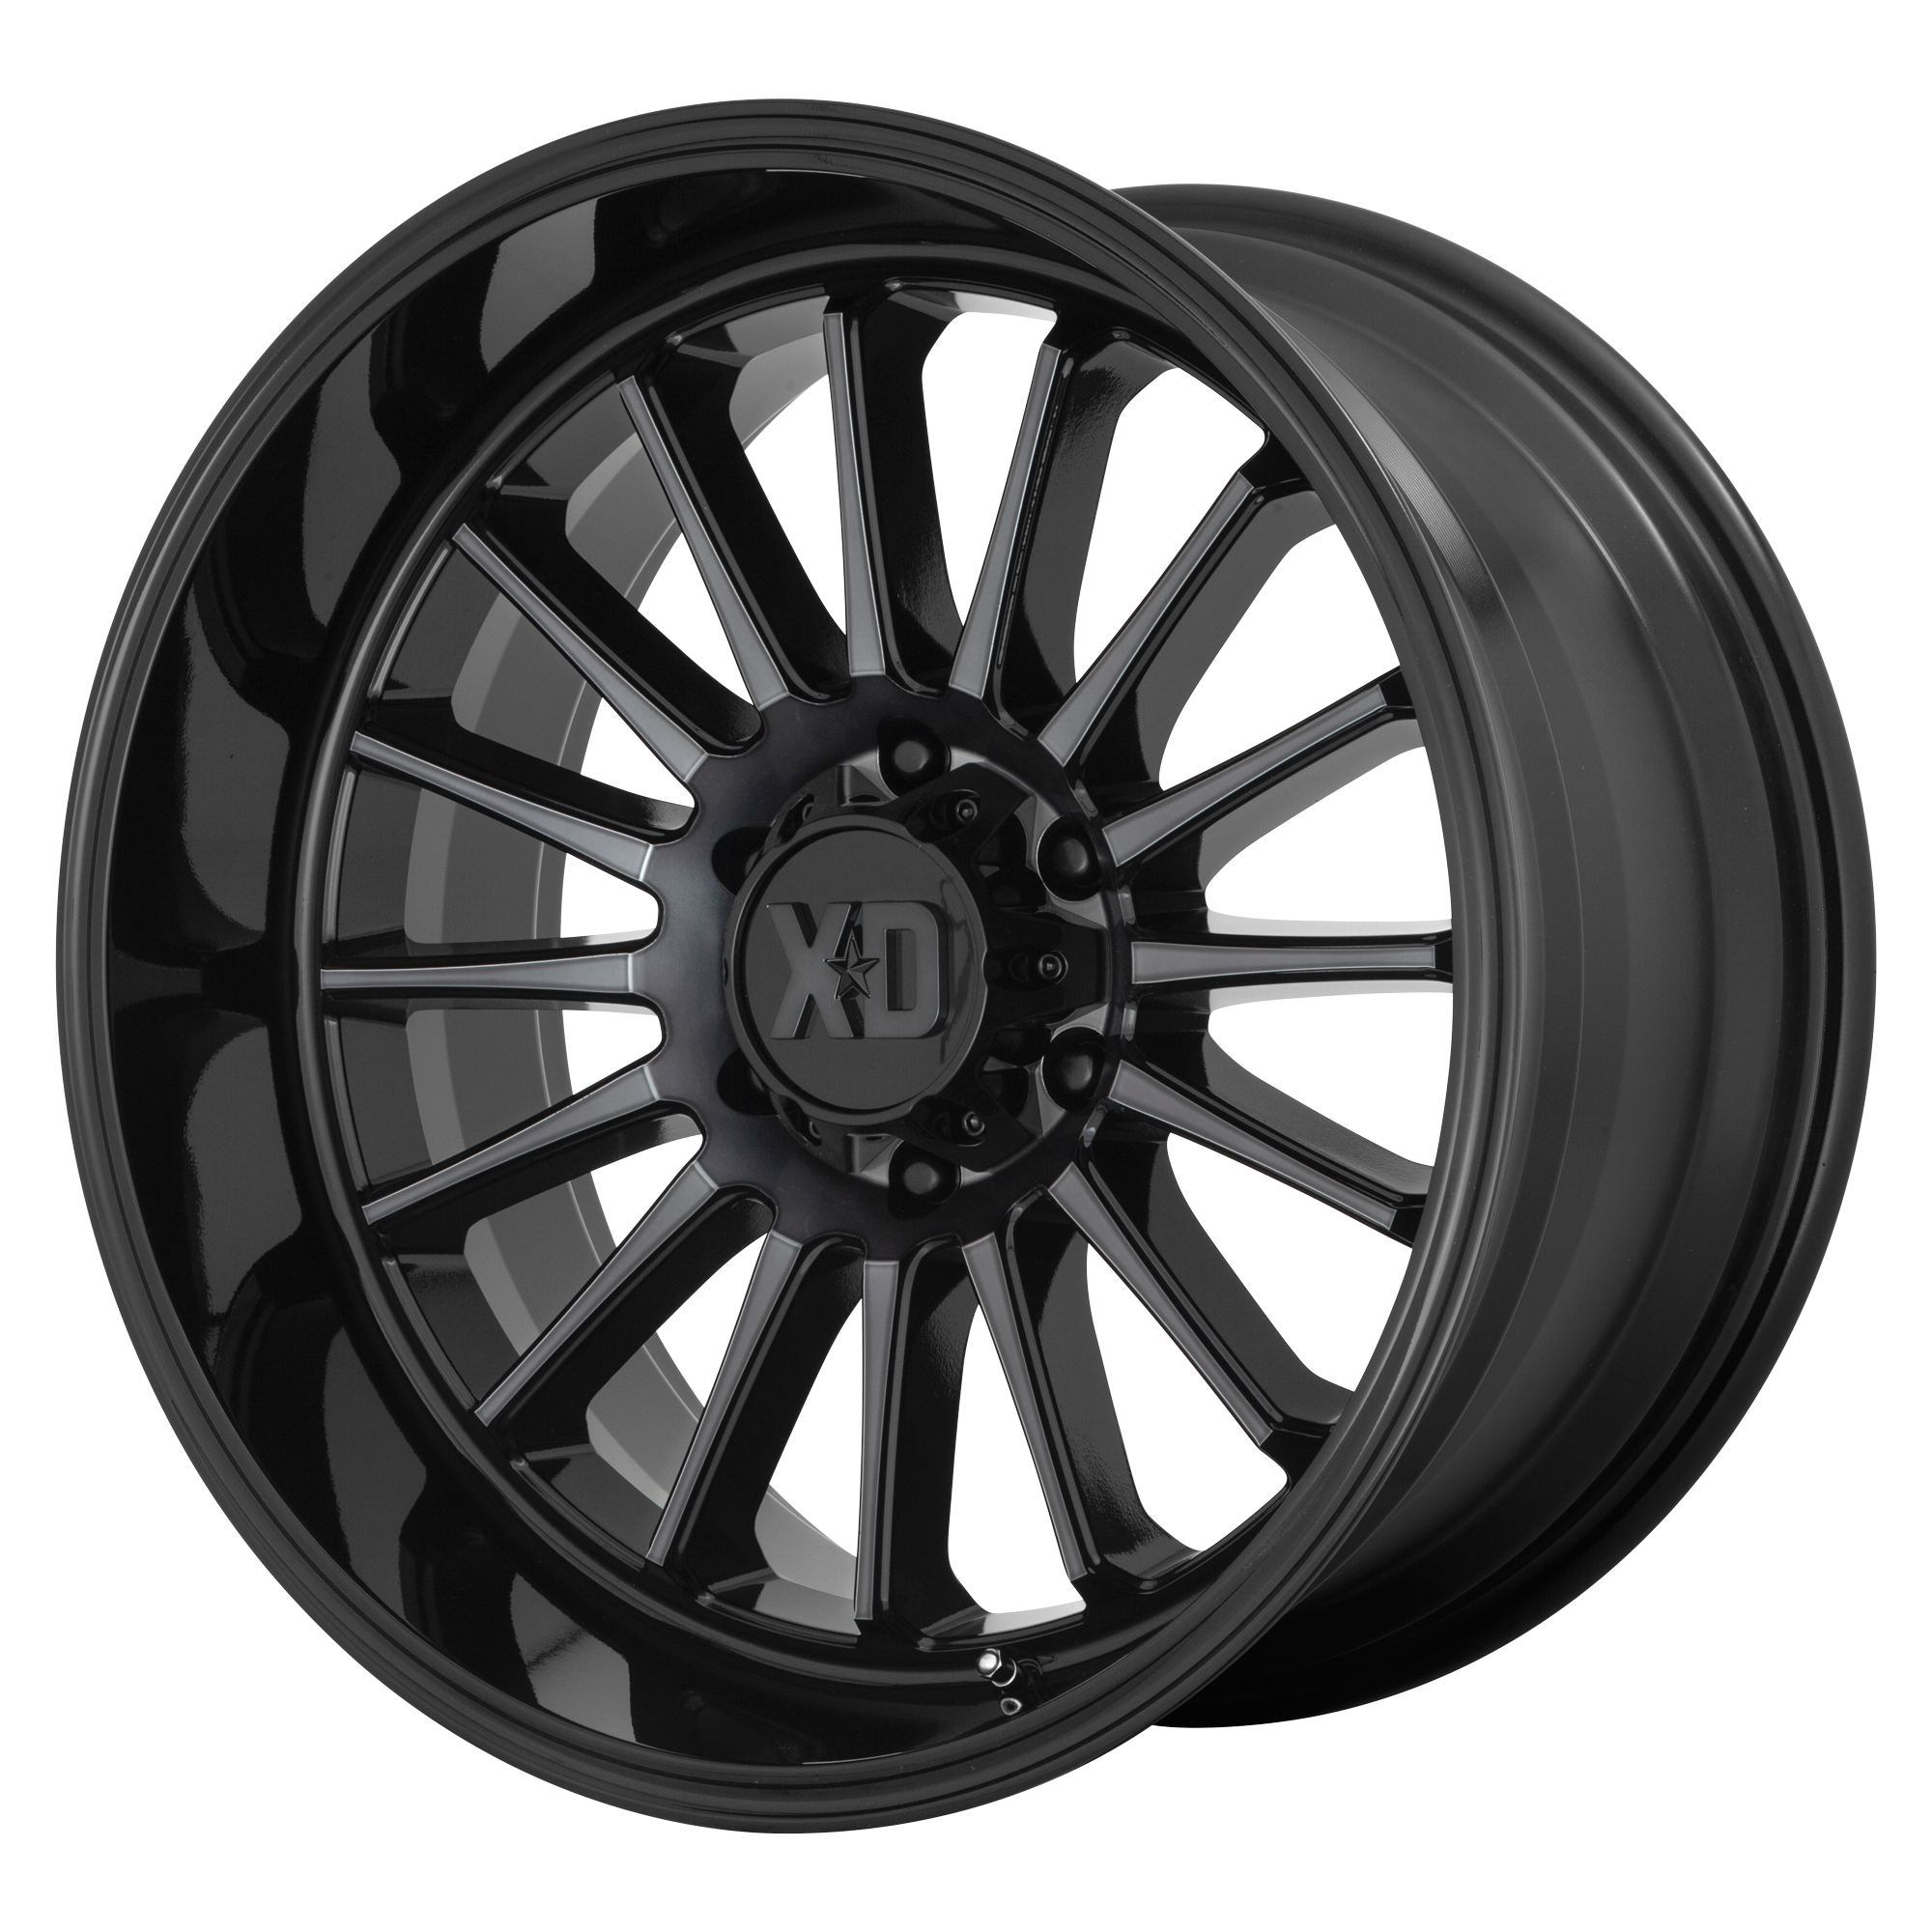 XD 20"x10" Non-Chrome Gloss Black With Gray Tint Custom Wheel ARSWCWXD85721088418N